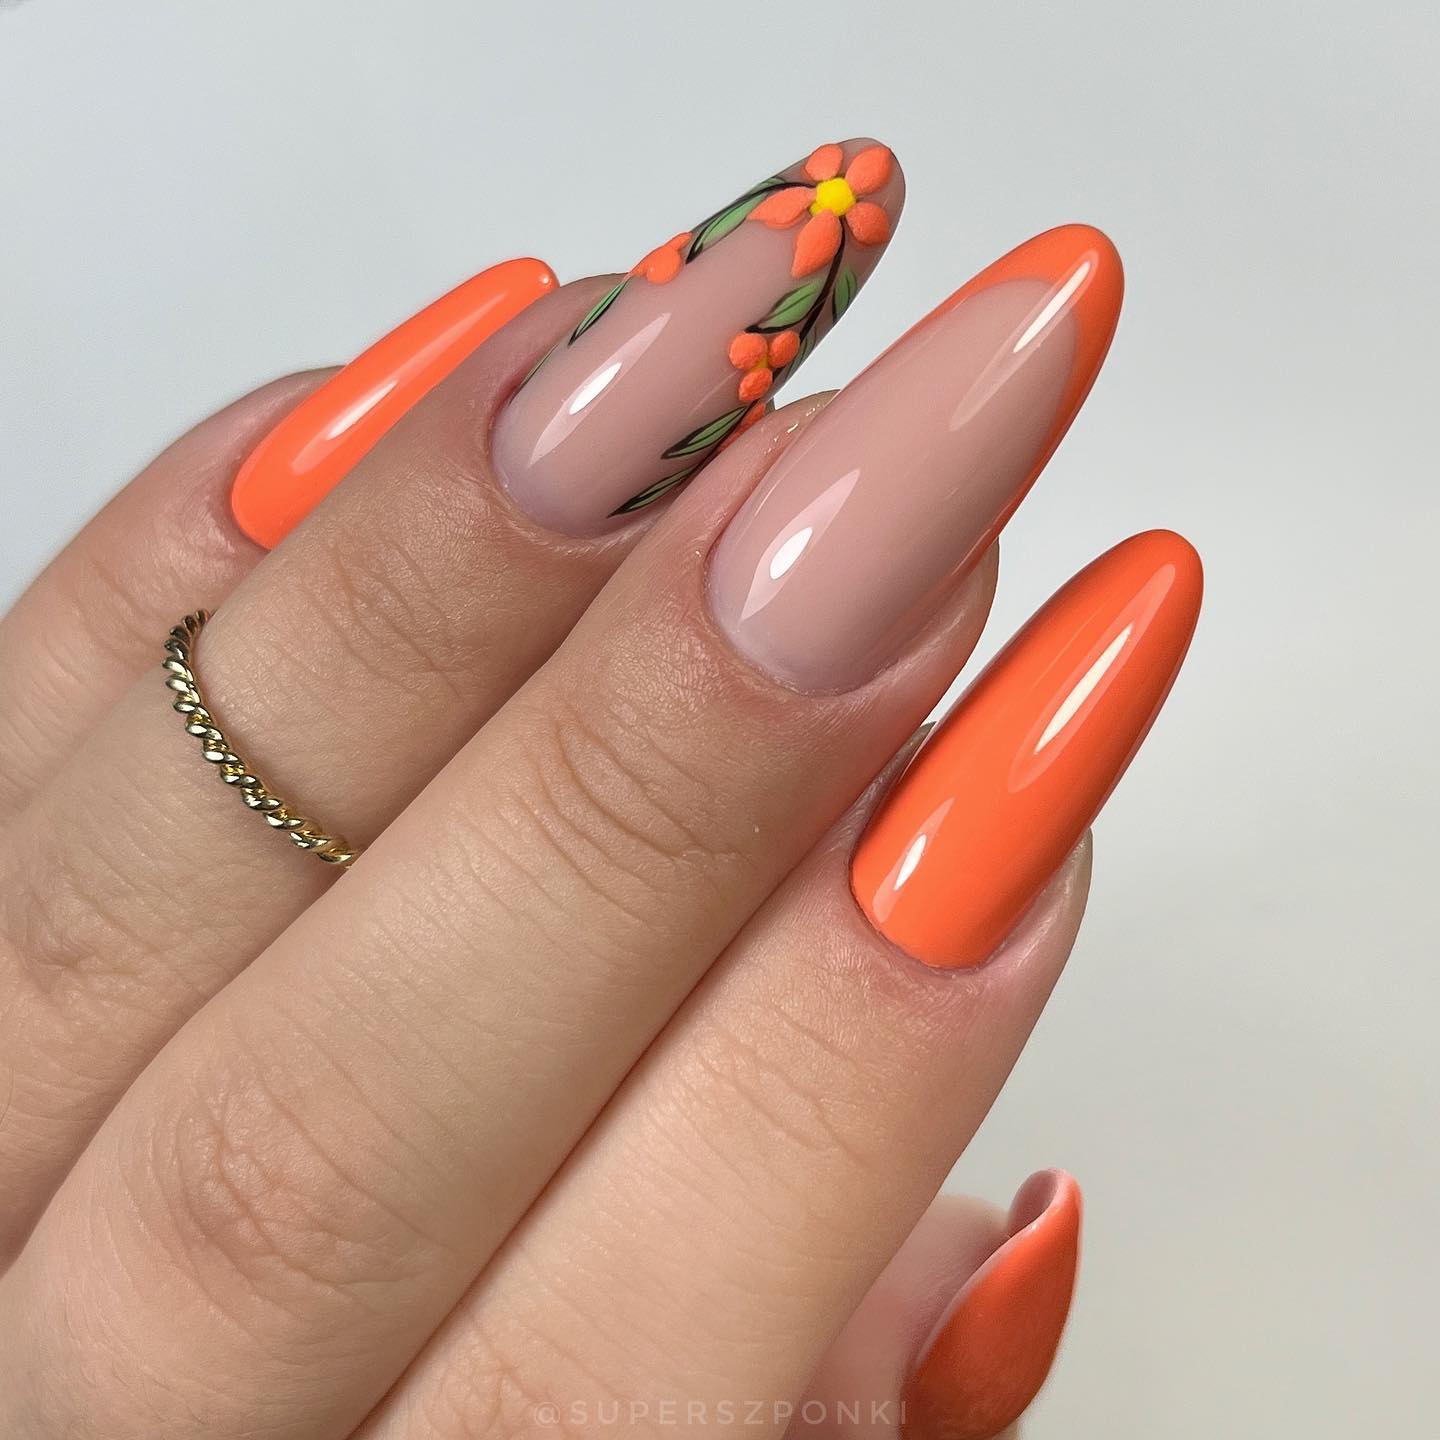 orange french tip nails 21